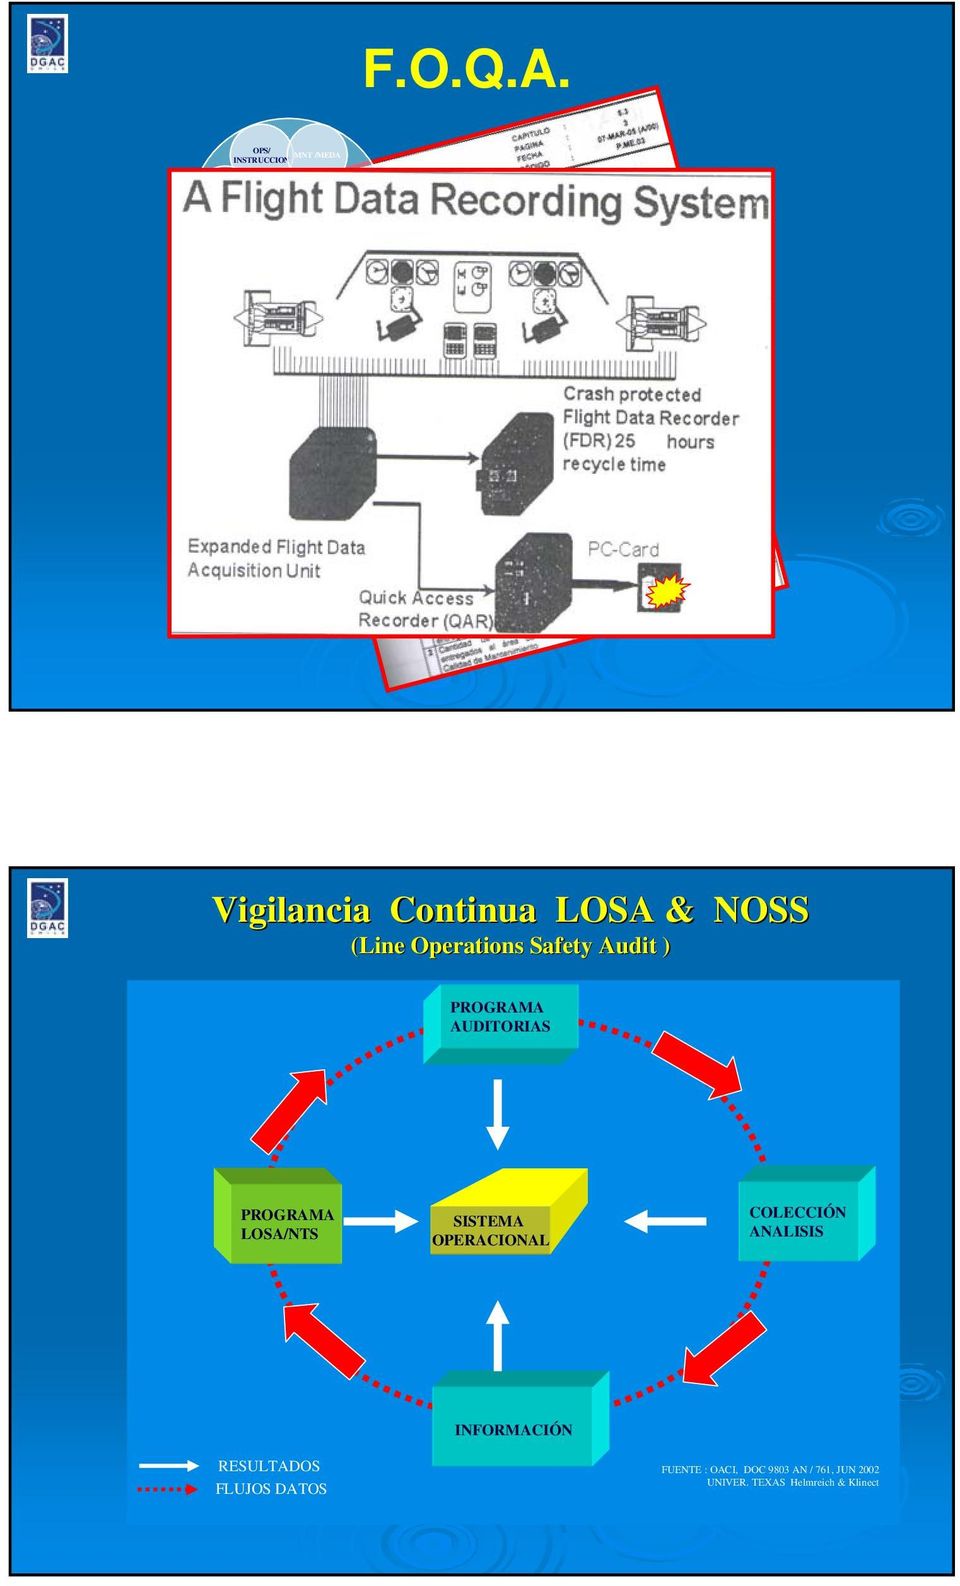 LOSA & NOSS (Line Operations Safety Audit ) PROGRAMA AUDITORIAS PROGRAMA LOSA/NTS